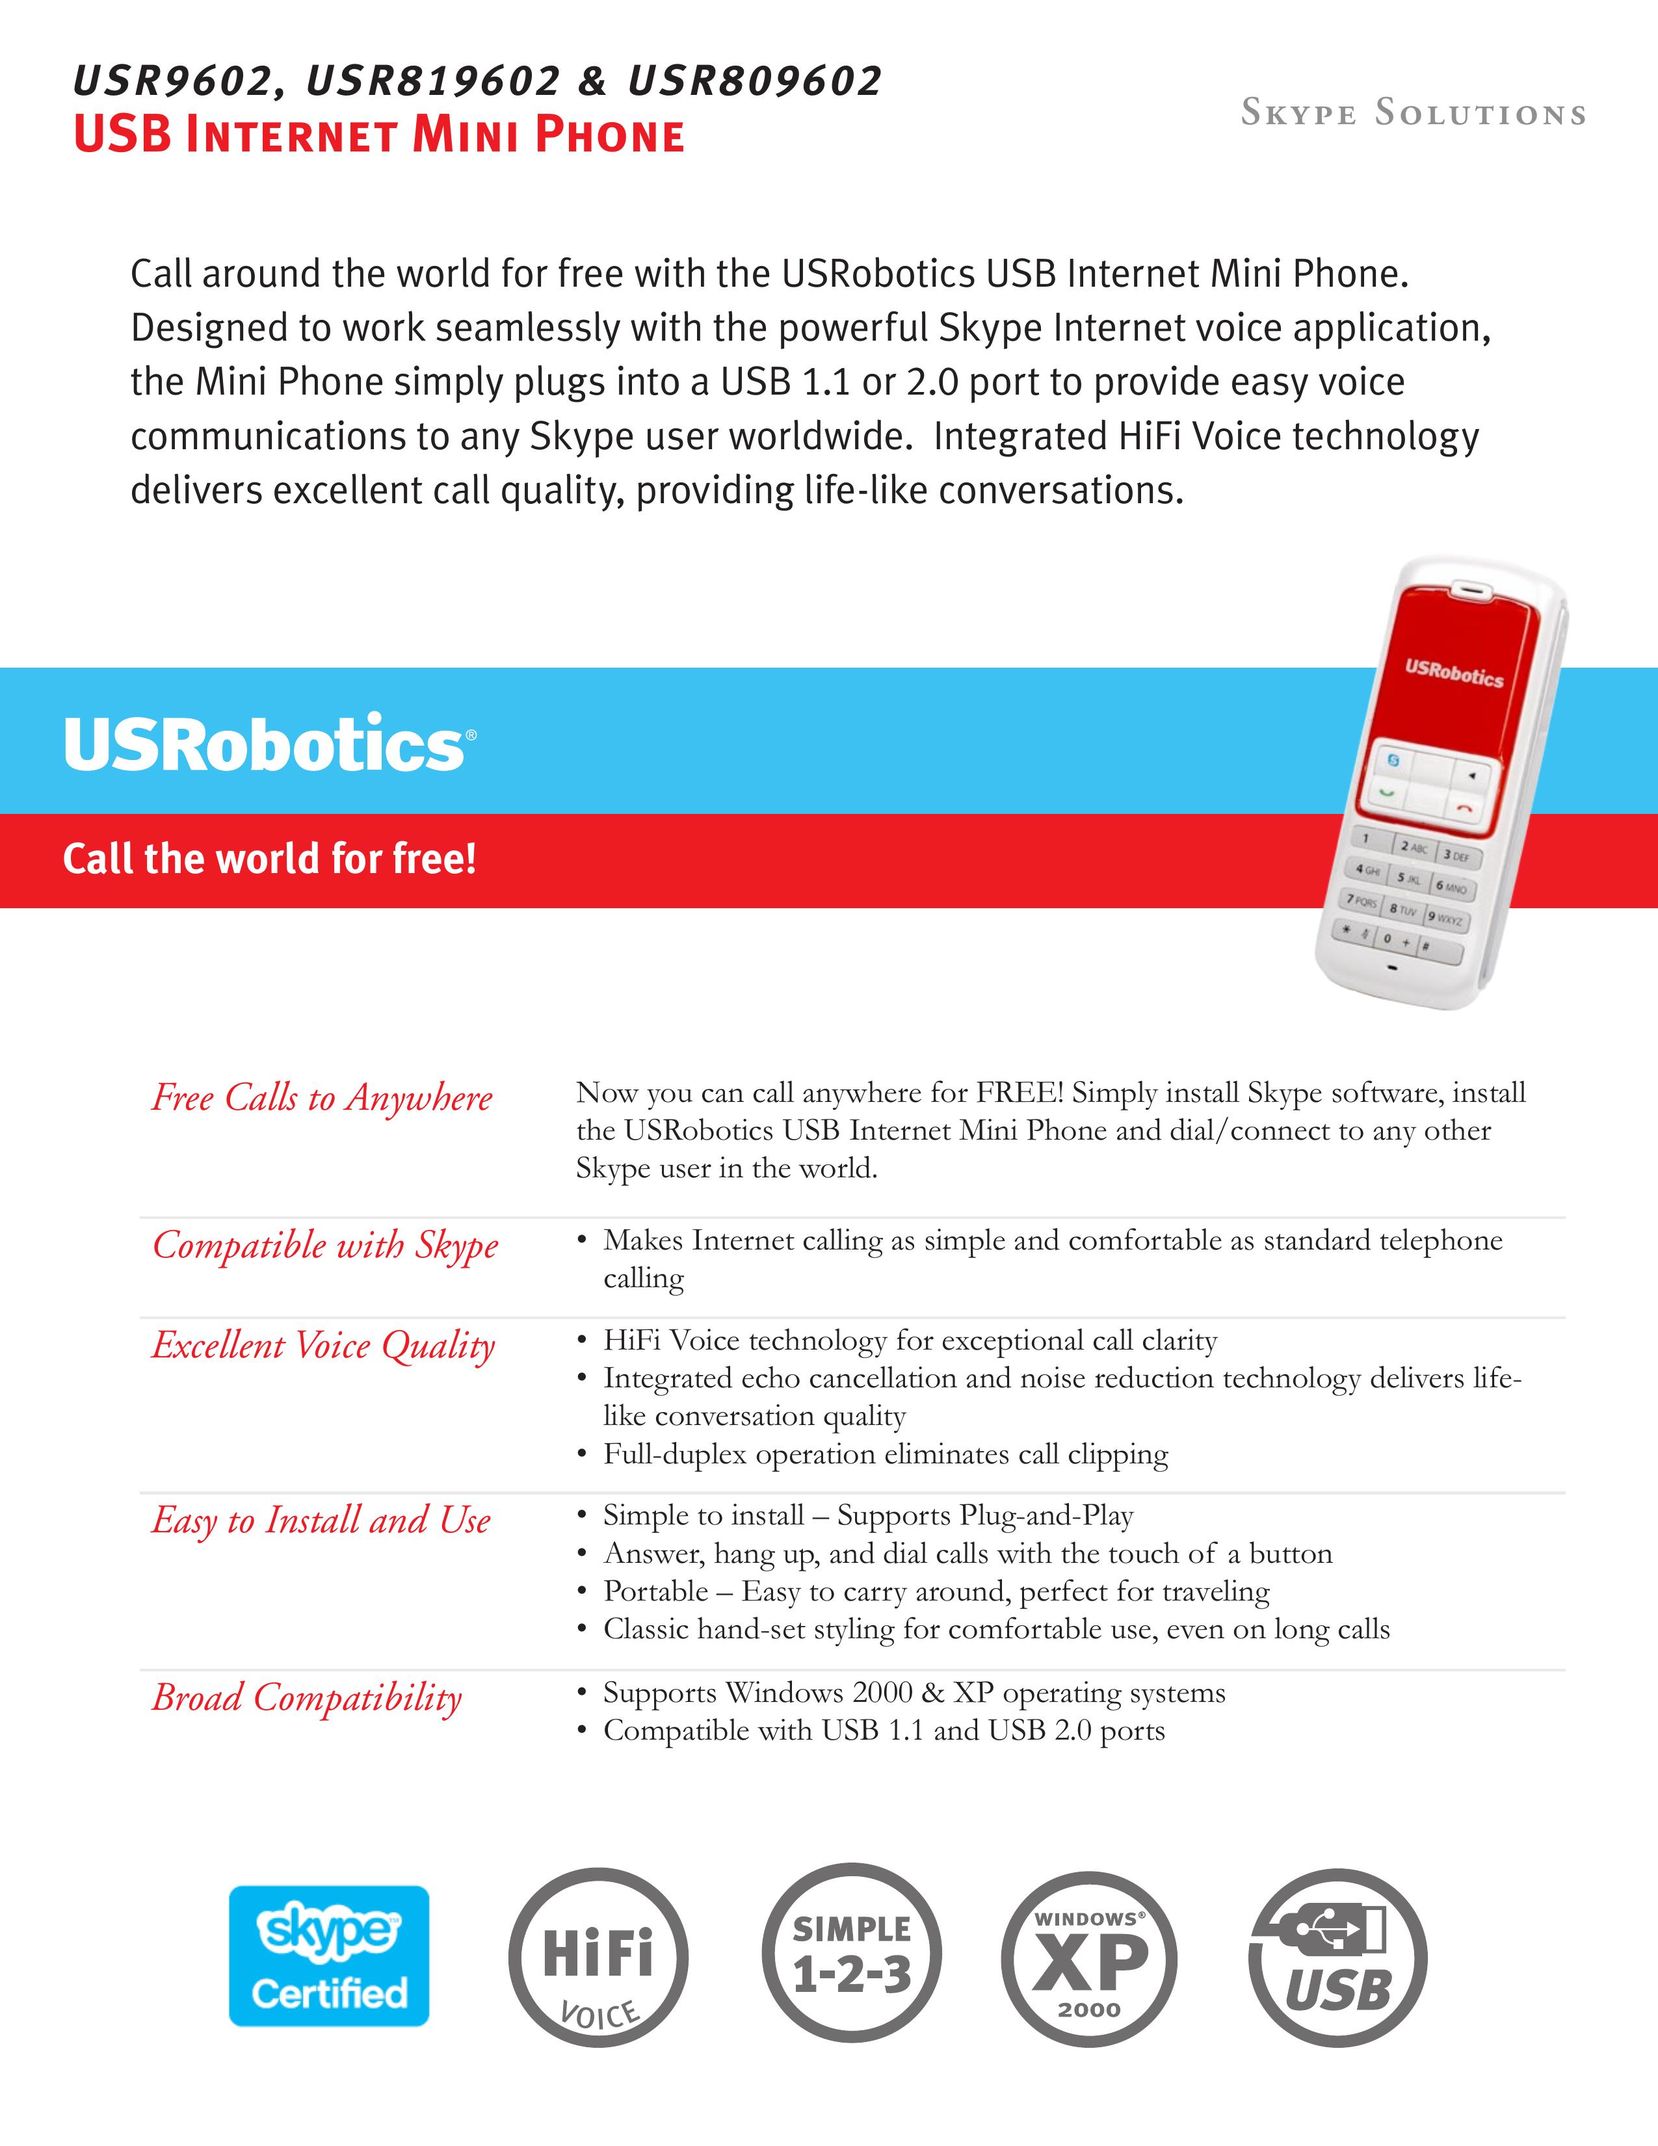 USRobotics USR809602 IP Phone User Manual